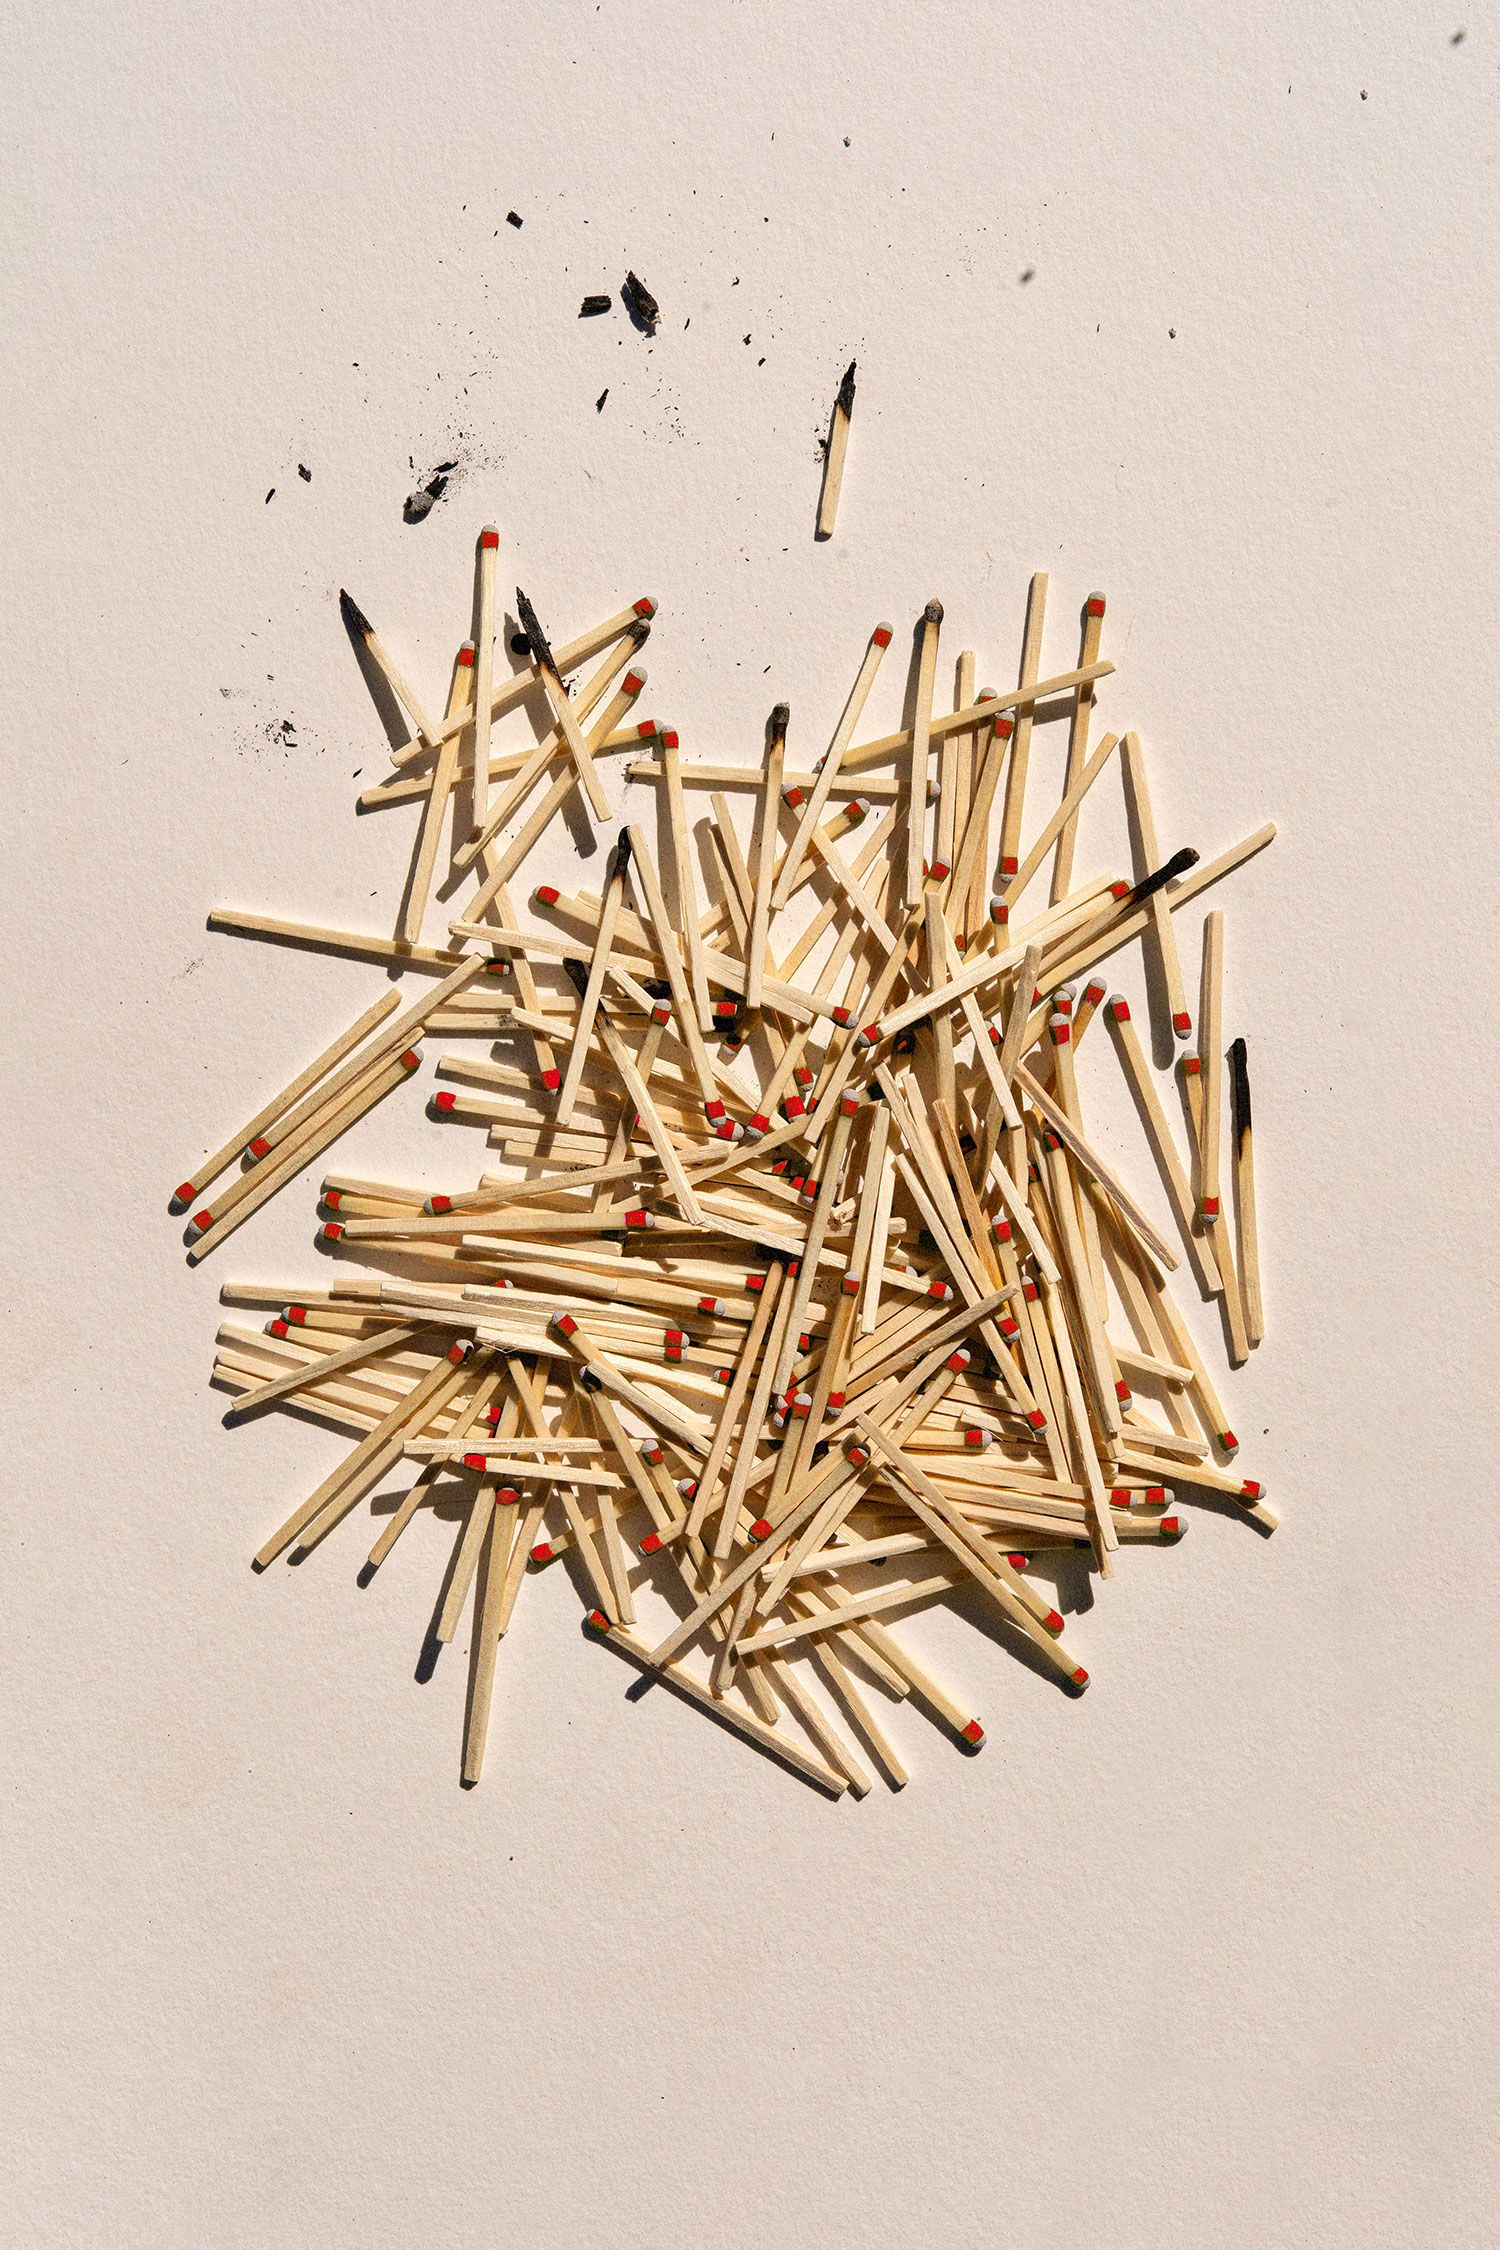 Several dozen matchsticks spilled onto the floor